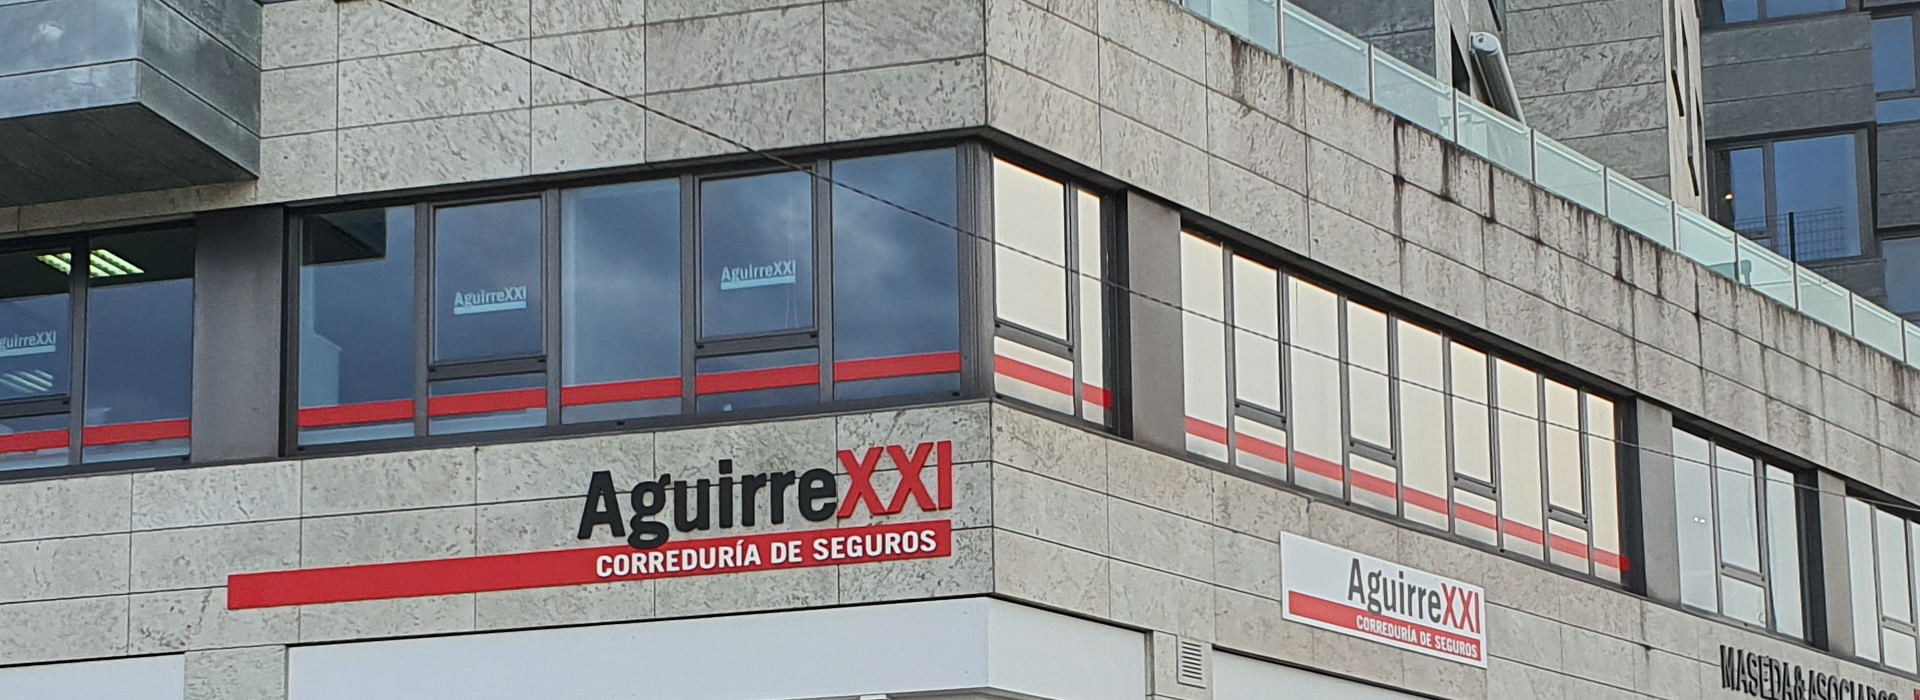 aguirre-xxi-header